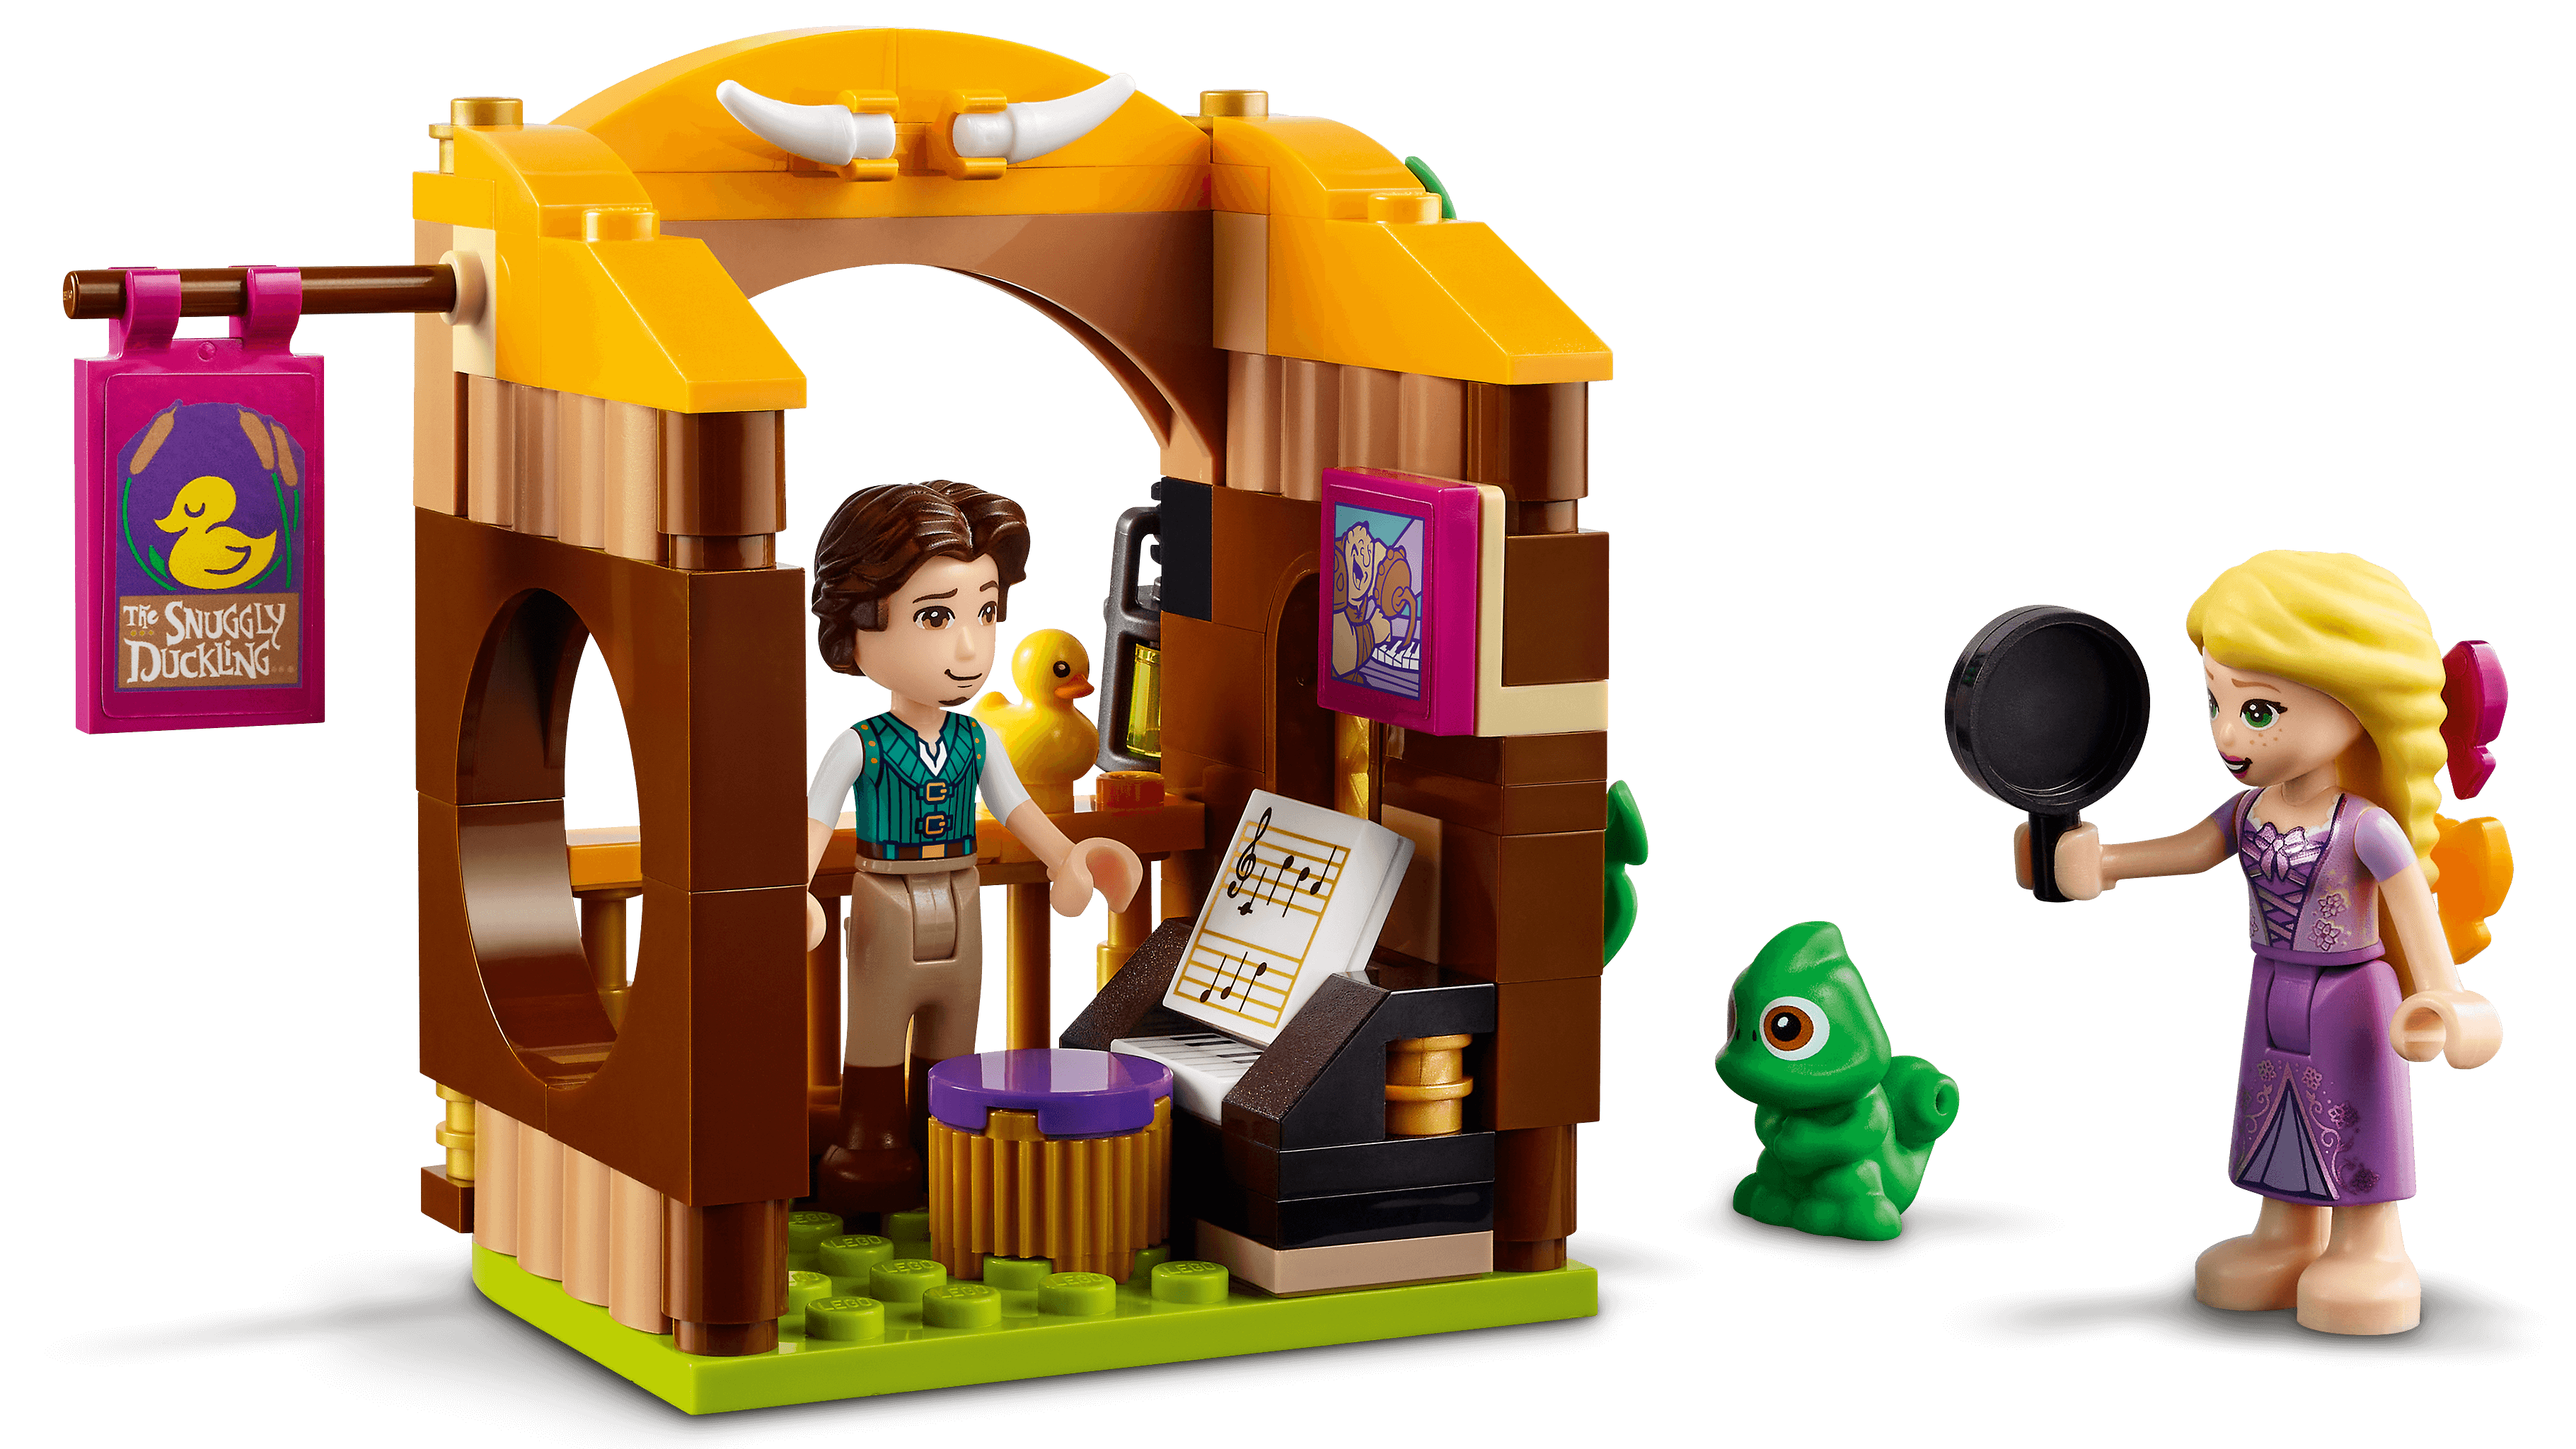 Lego Disney Pequeña Torre de Rapunzel